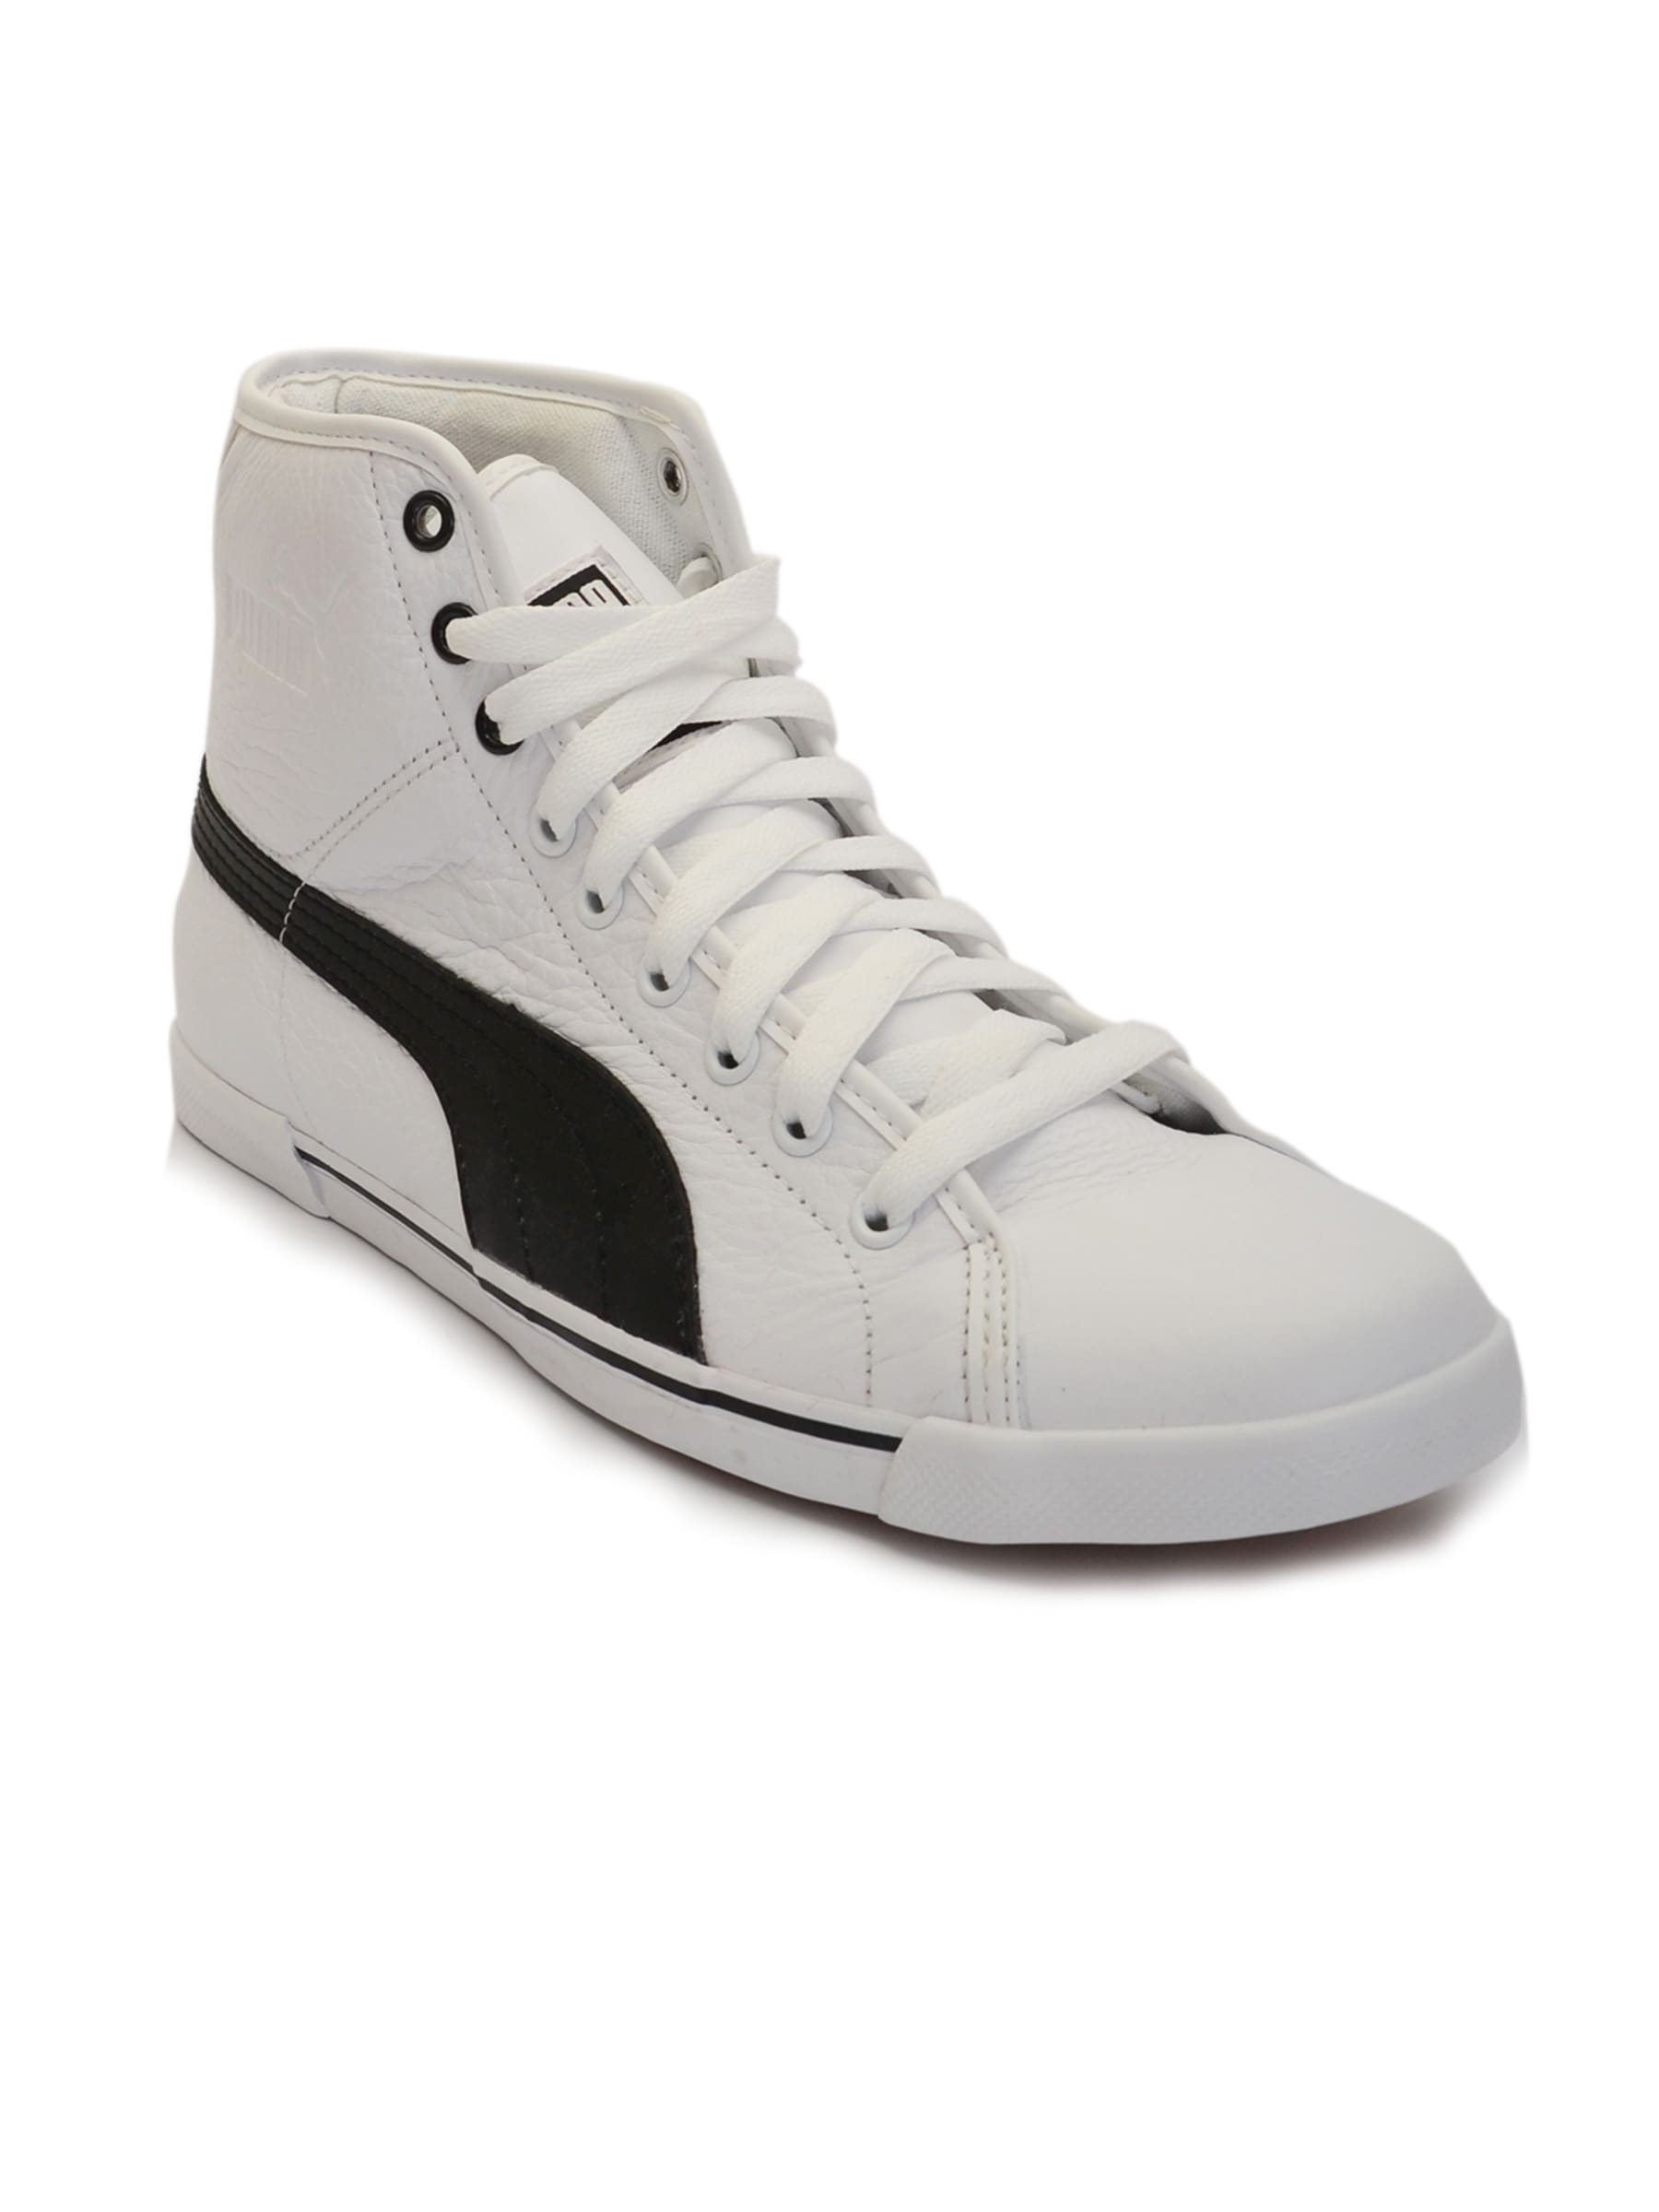 Puma Unisex Benecio Mid leather White Casual Shoes